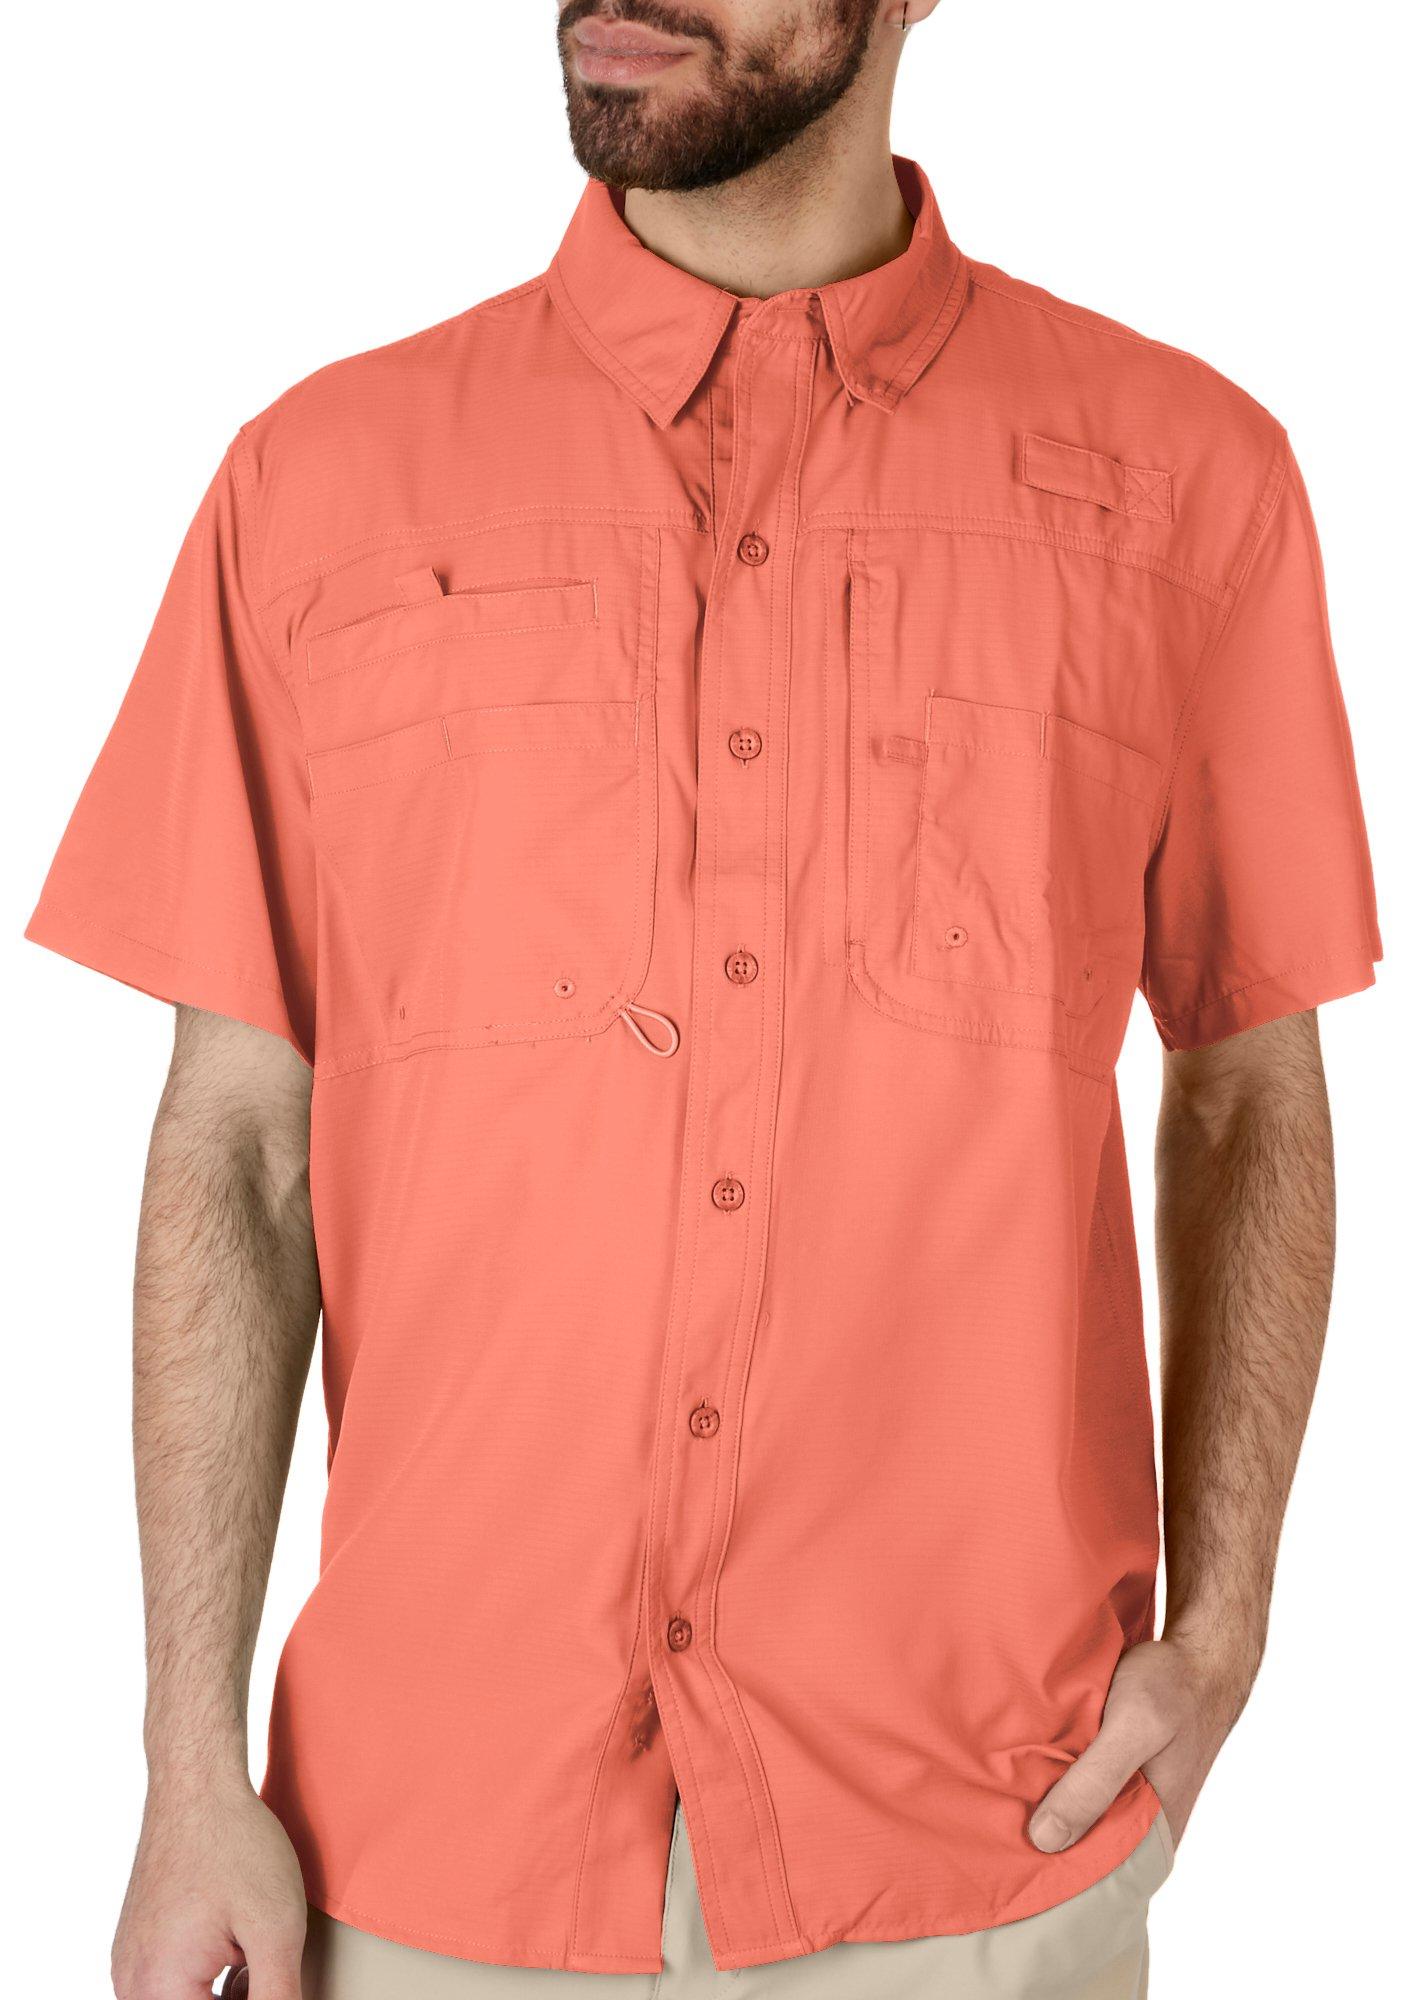 2 Reel Legends Men's 2XL Short Sleeve T-Shirt - clothing & accessories - by  owner - apparel sale - craigslist